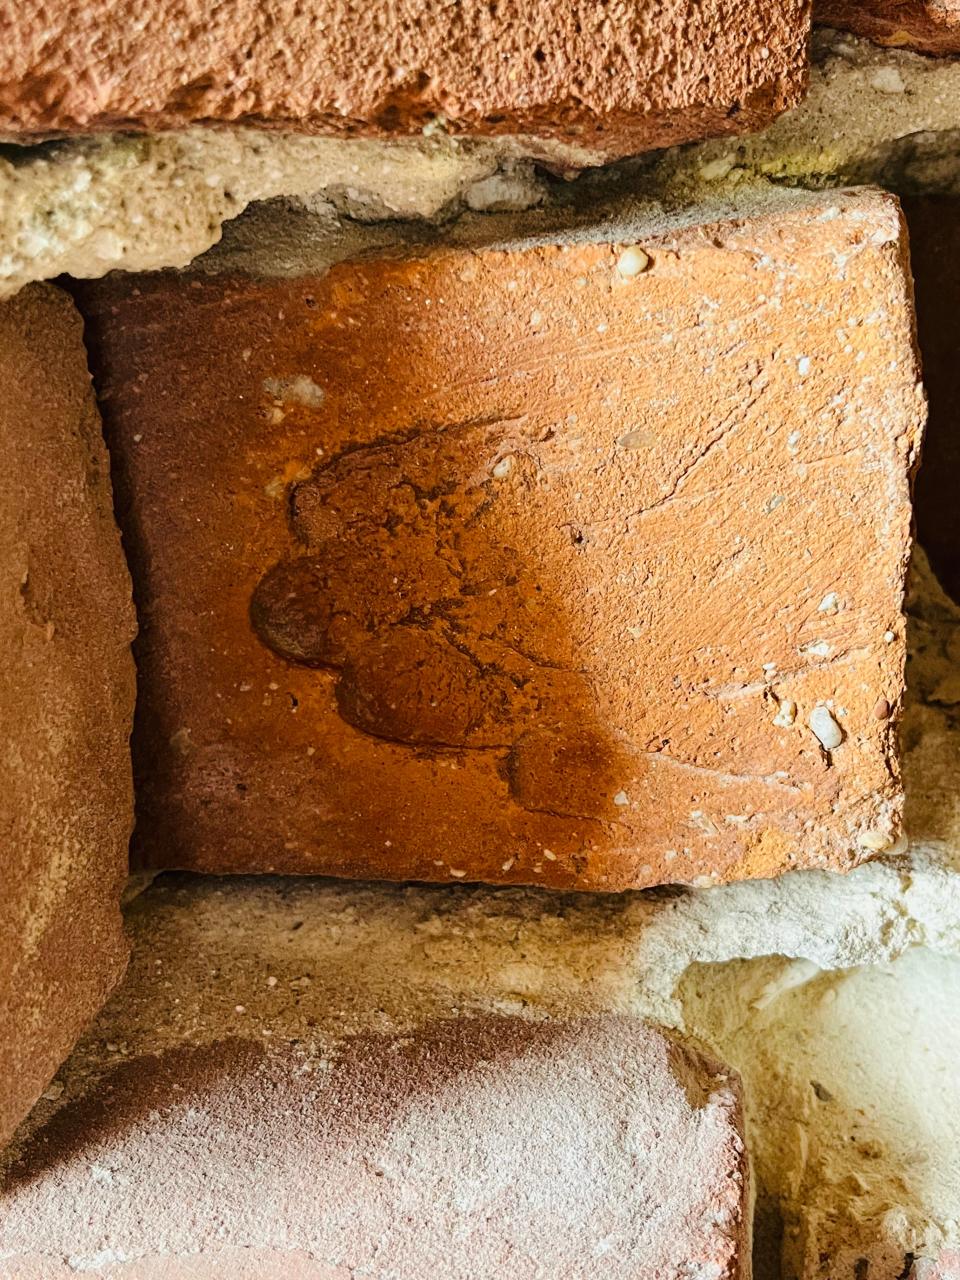 On some brickwork at Fort Pulaski fingerprints of the slaves who made them can be seen.